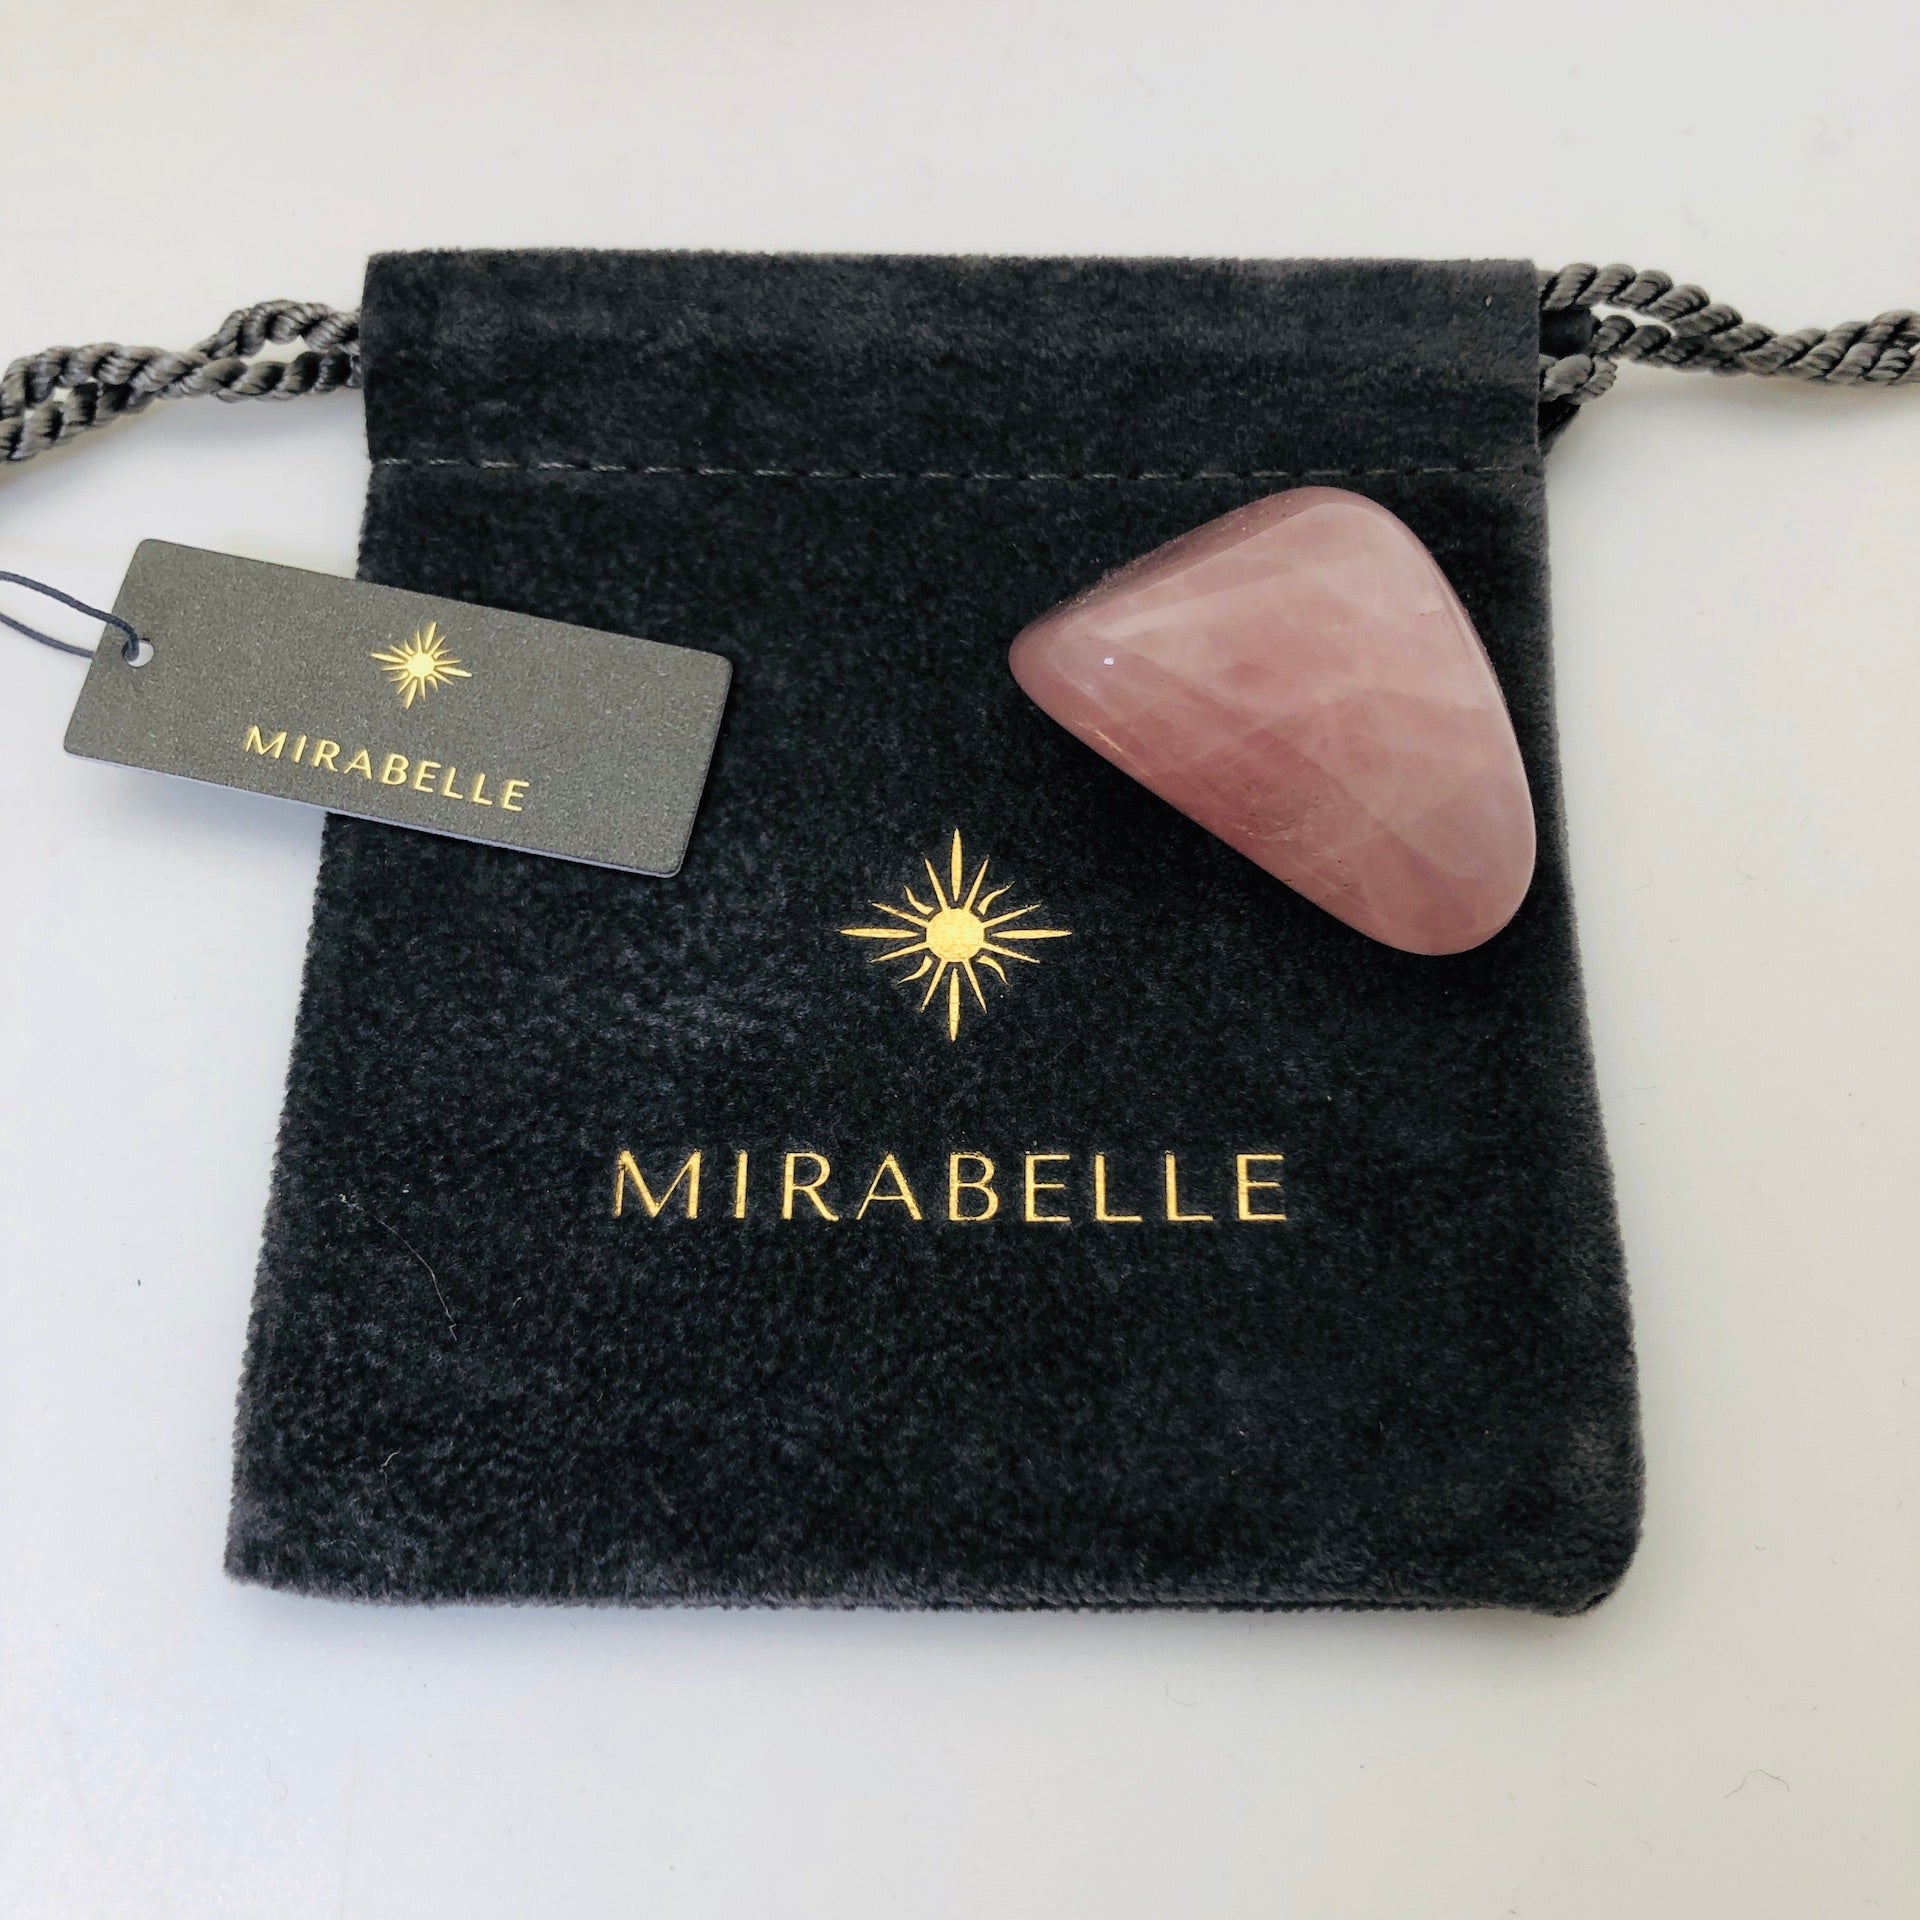 Rose quartz pebble for Love - Mirabelle Jewellery